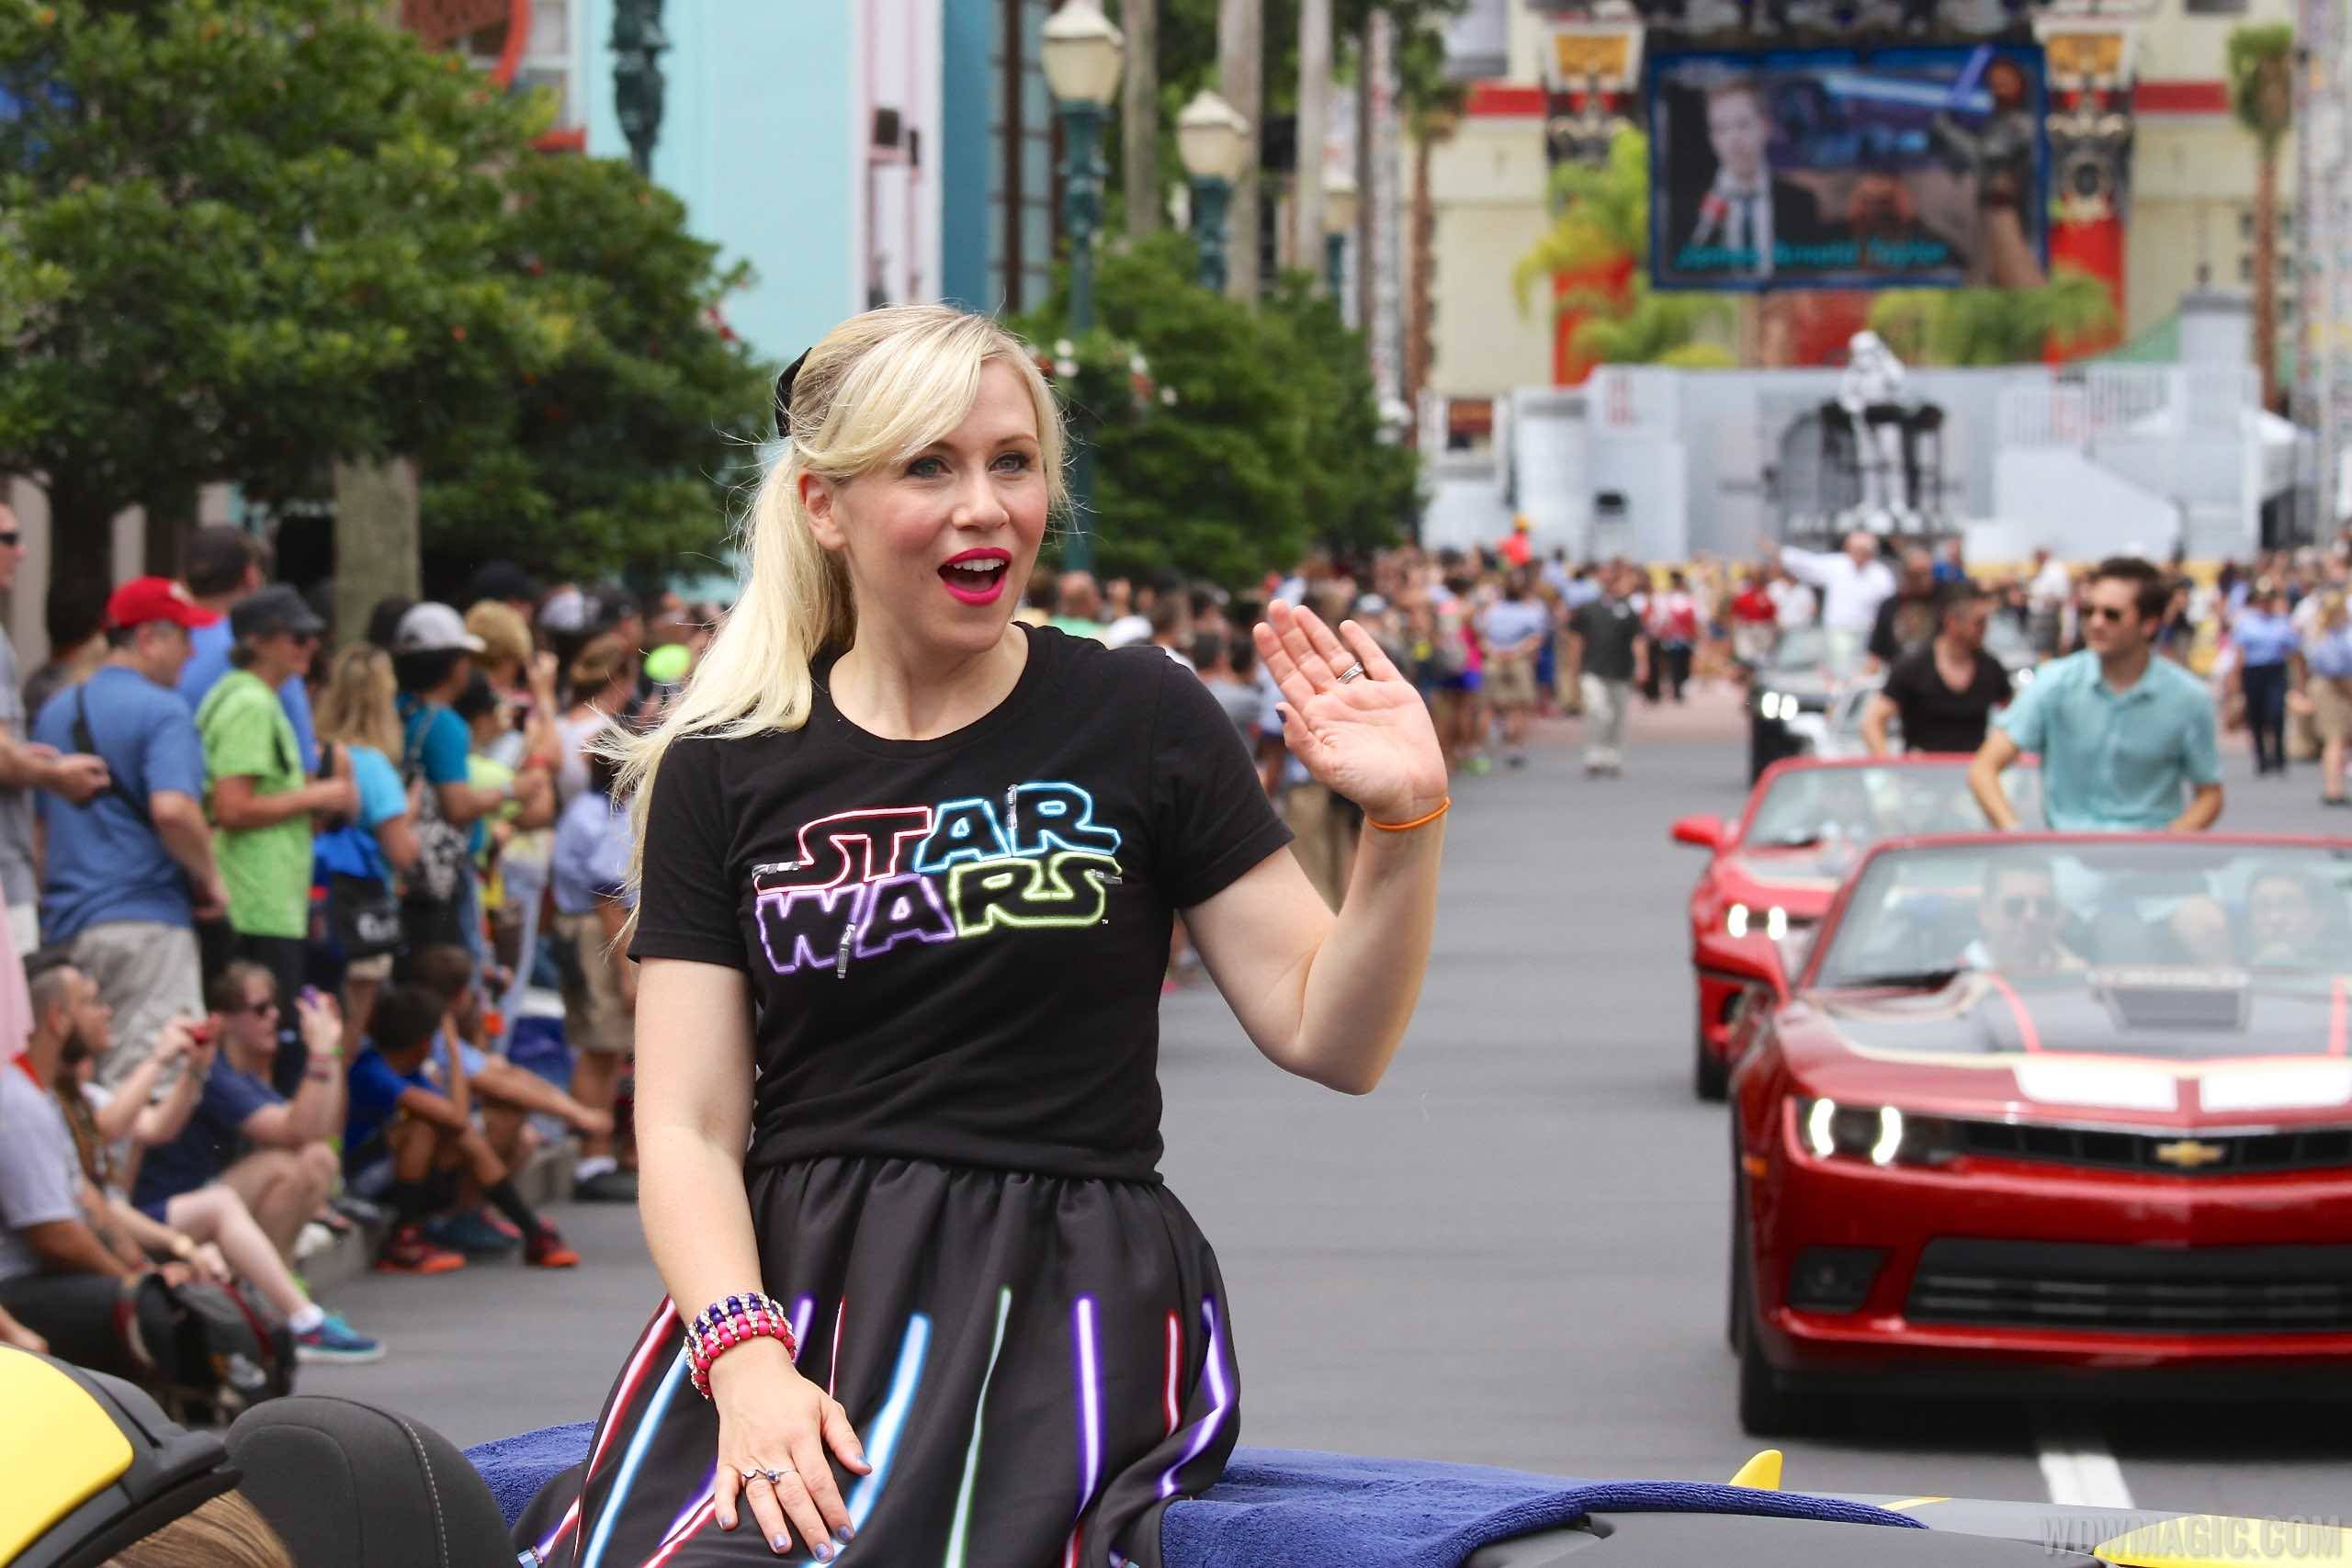 2015 Star Wars Weekends - Weekend 5 Legends of the Force motorcade celebrities - Ashley Eckstein